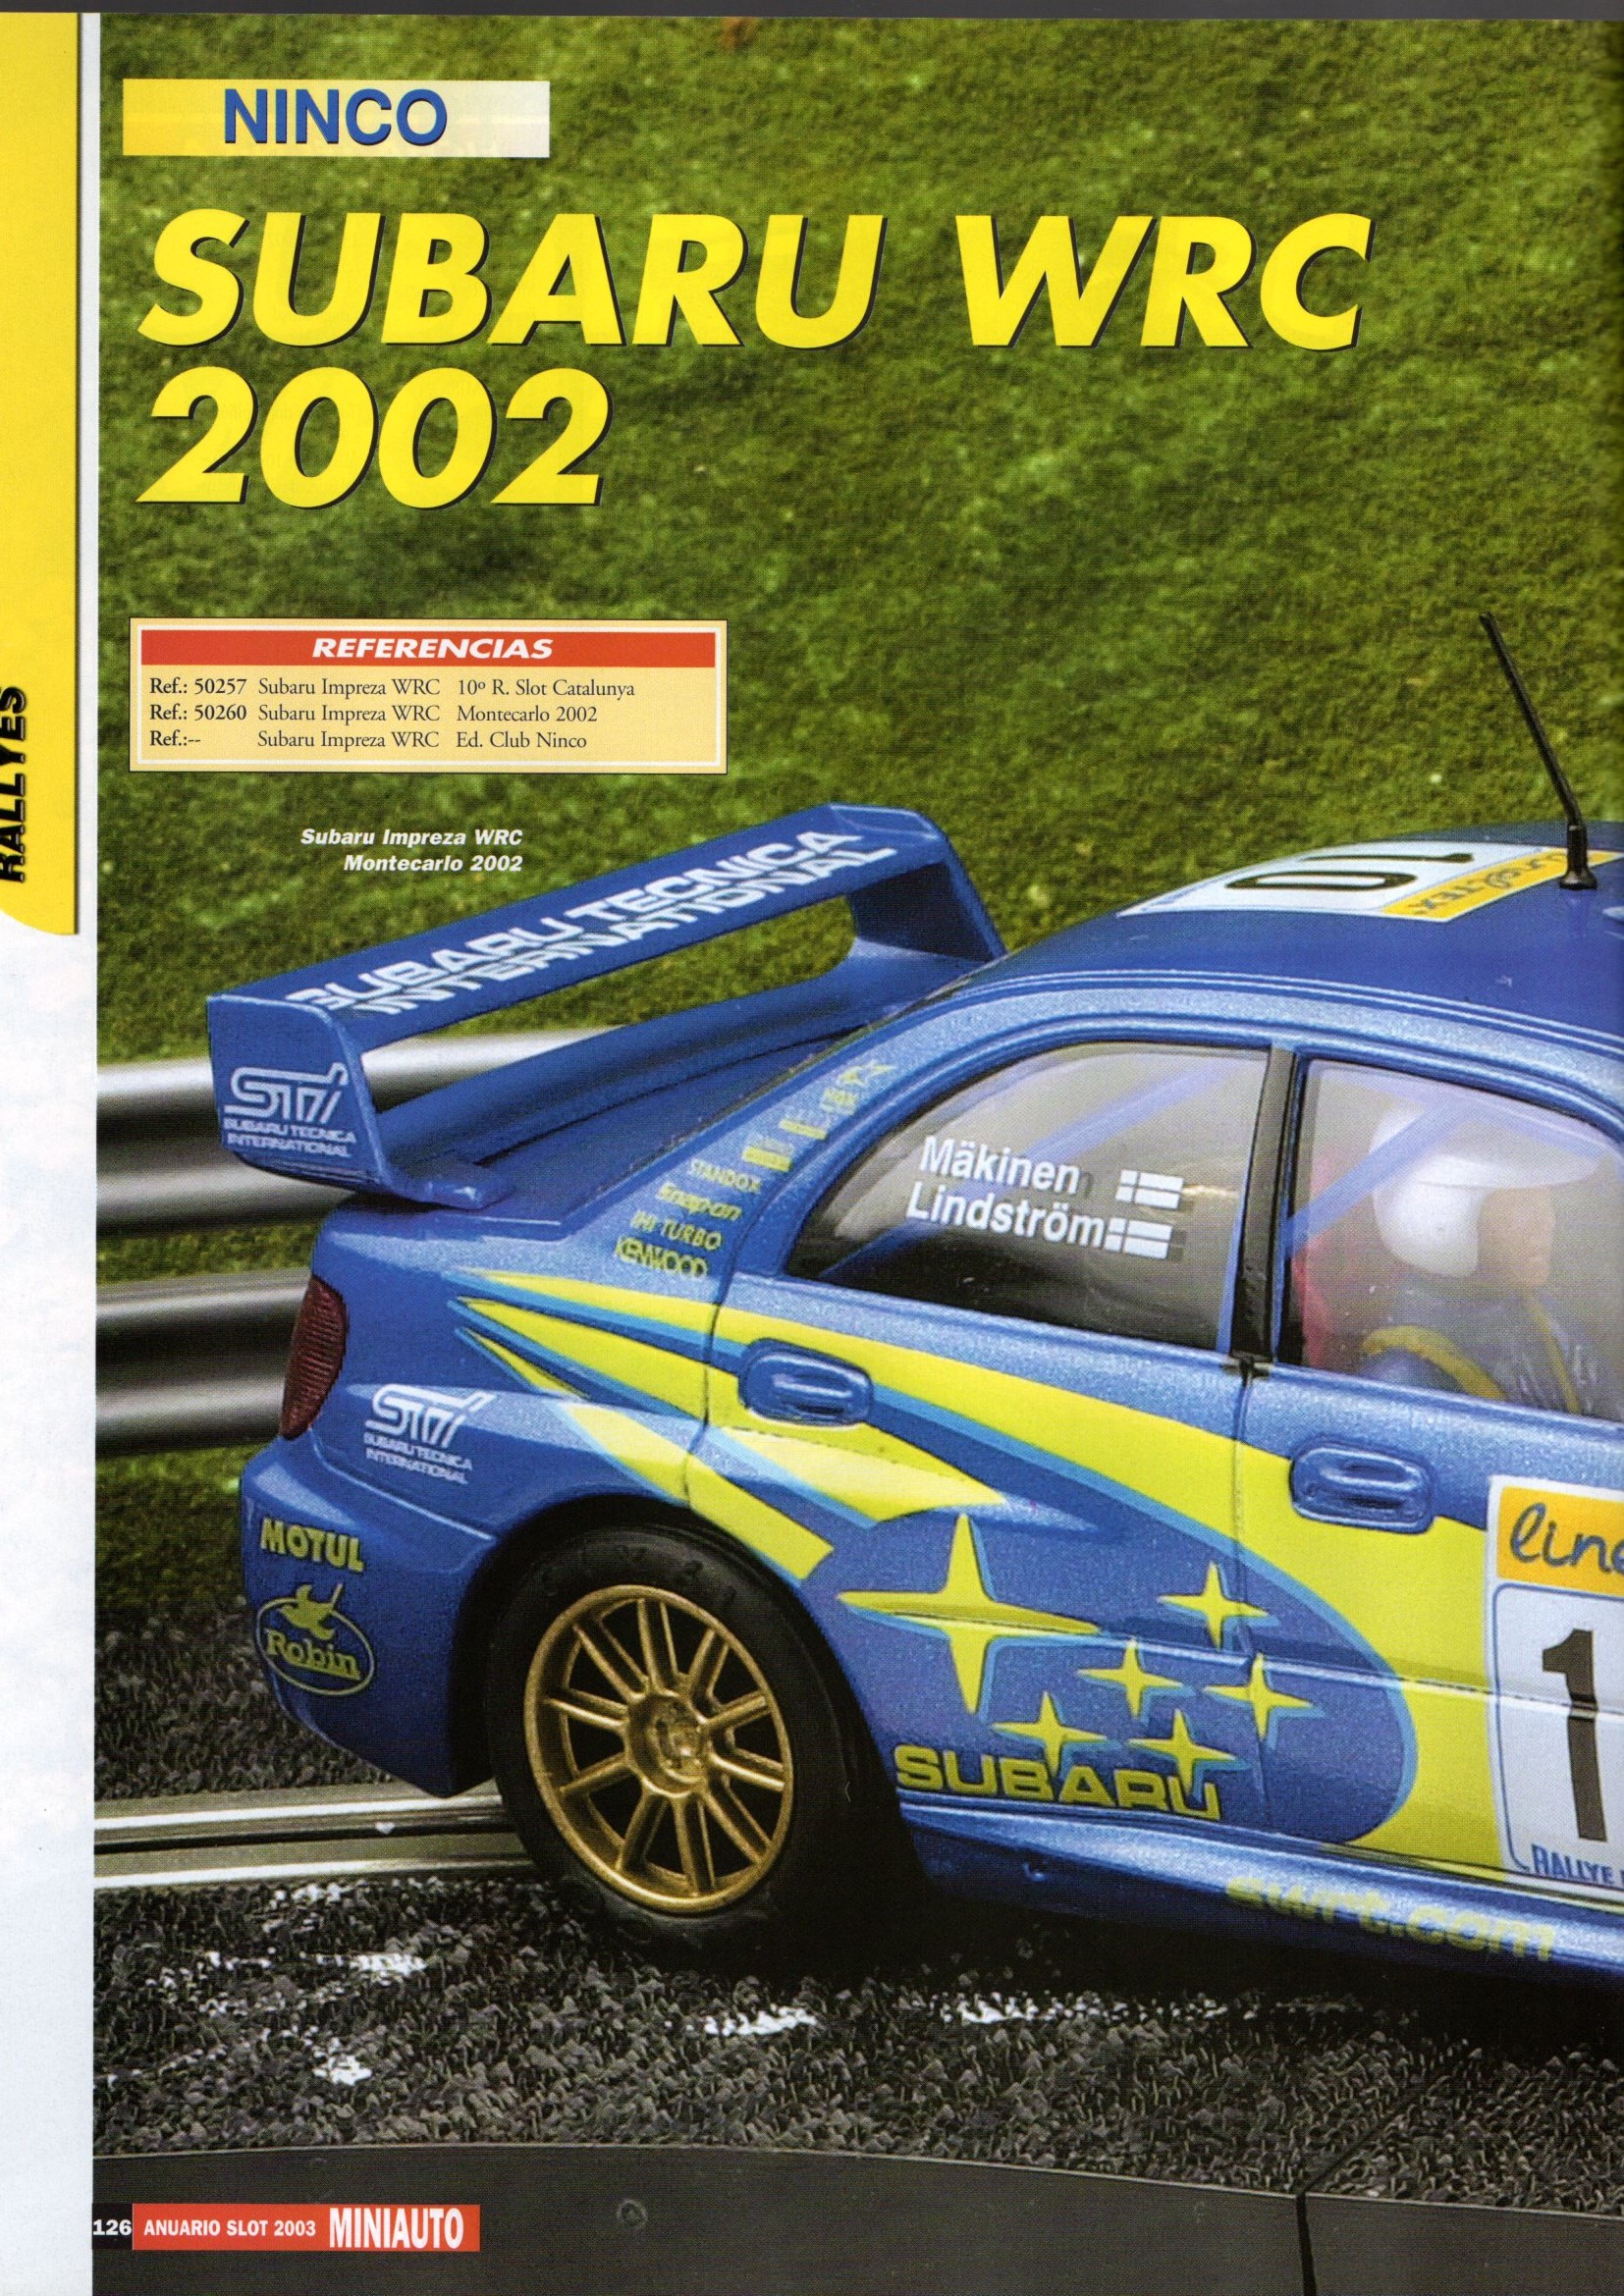 Subaru Impresa WRC (50293